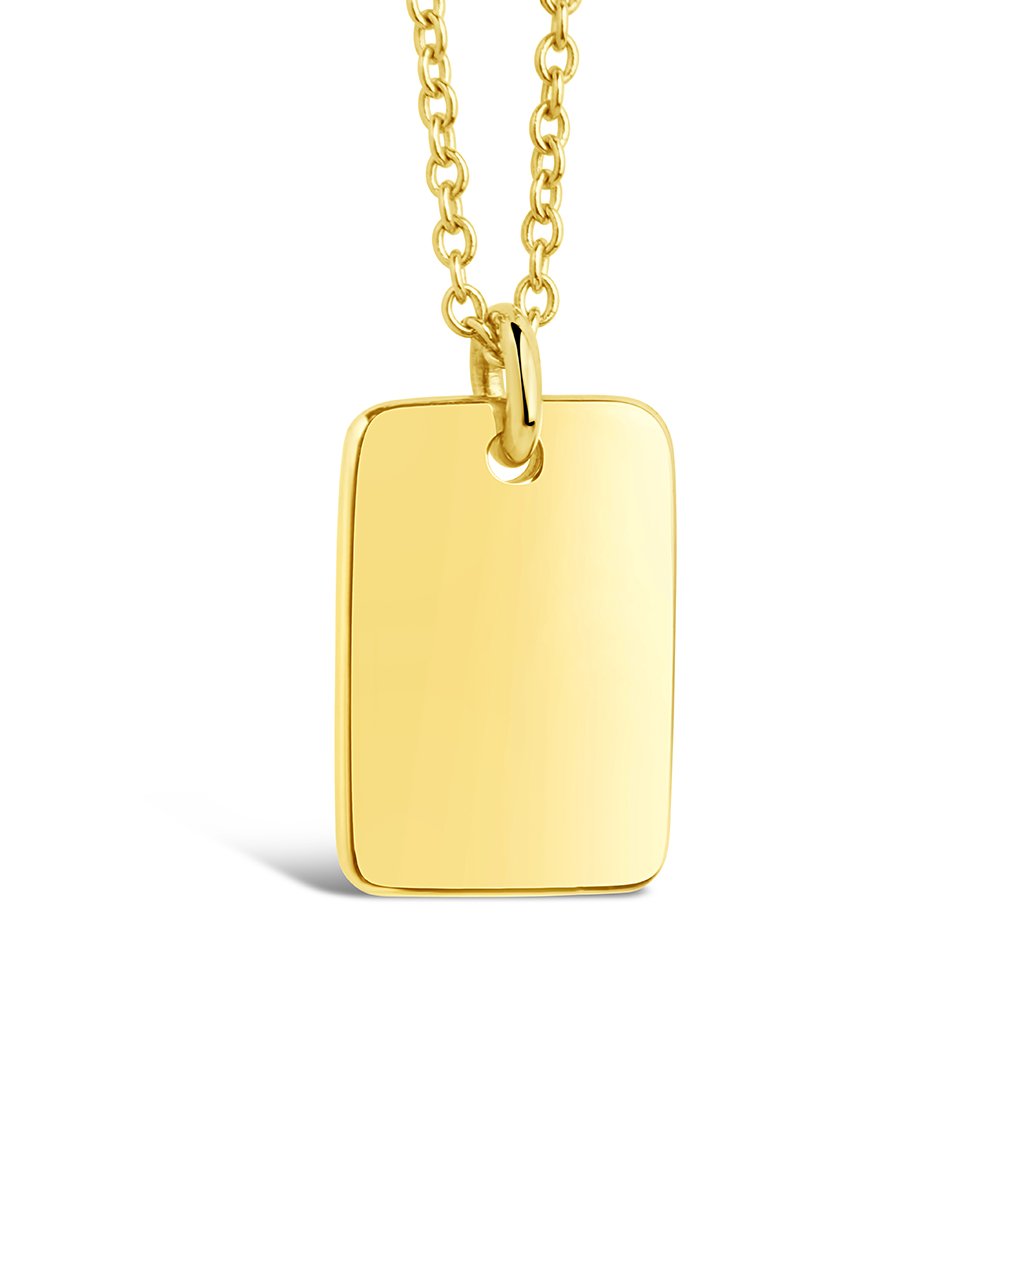 Louis Vuitton Dog Tag Pendant Necklace 18K Yellow Gold - Chronostore